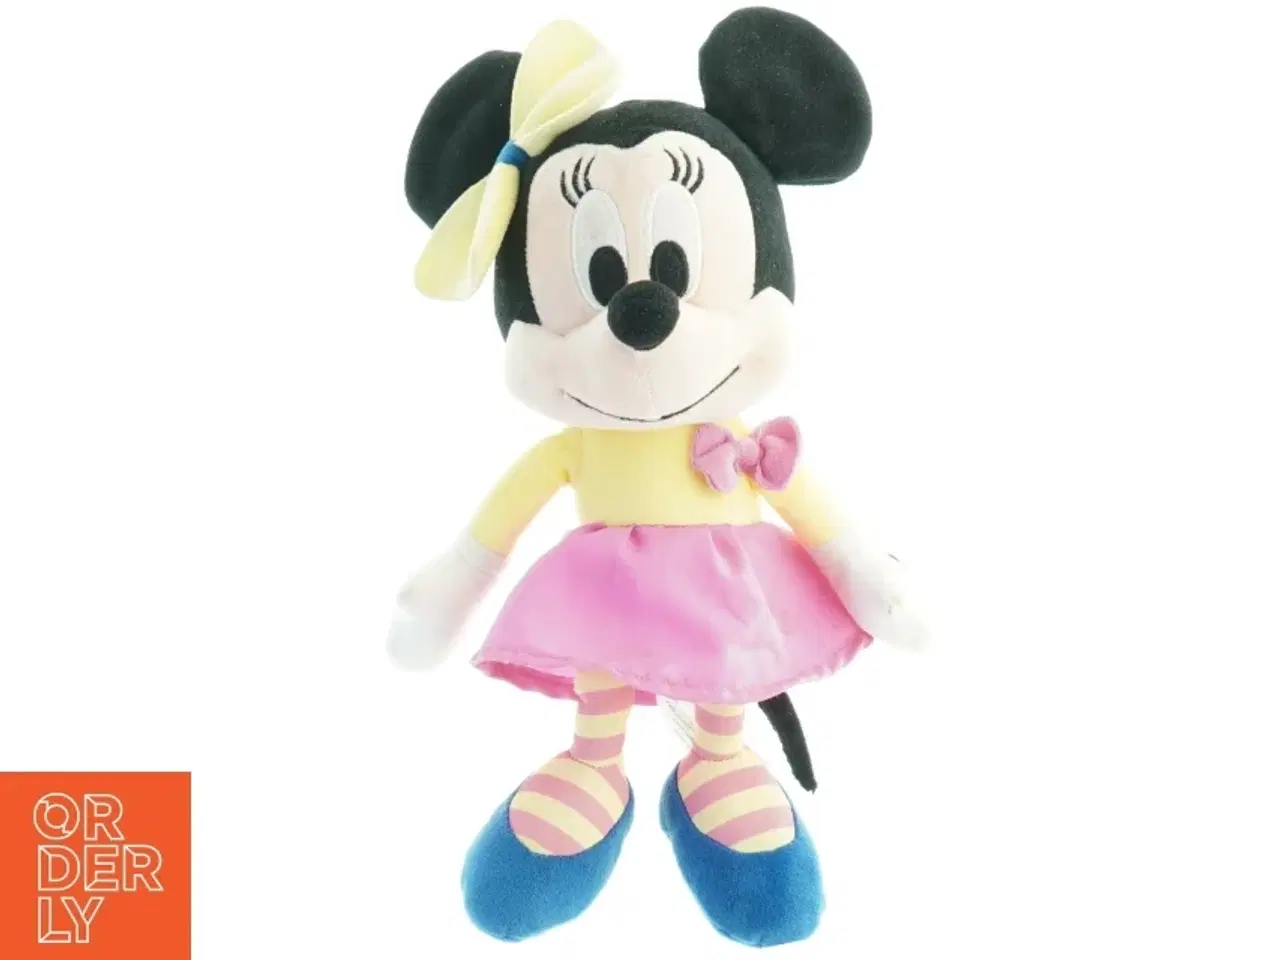 Billede 1 - Minnie Mouse - Disney (str. 30 x 18 cm)